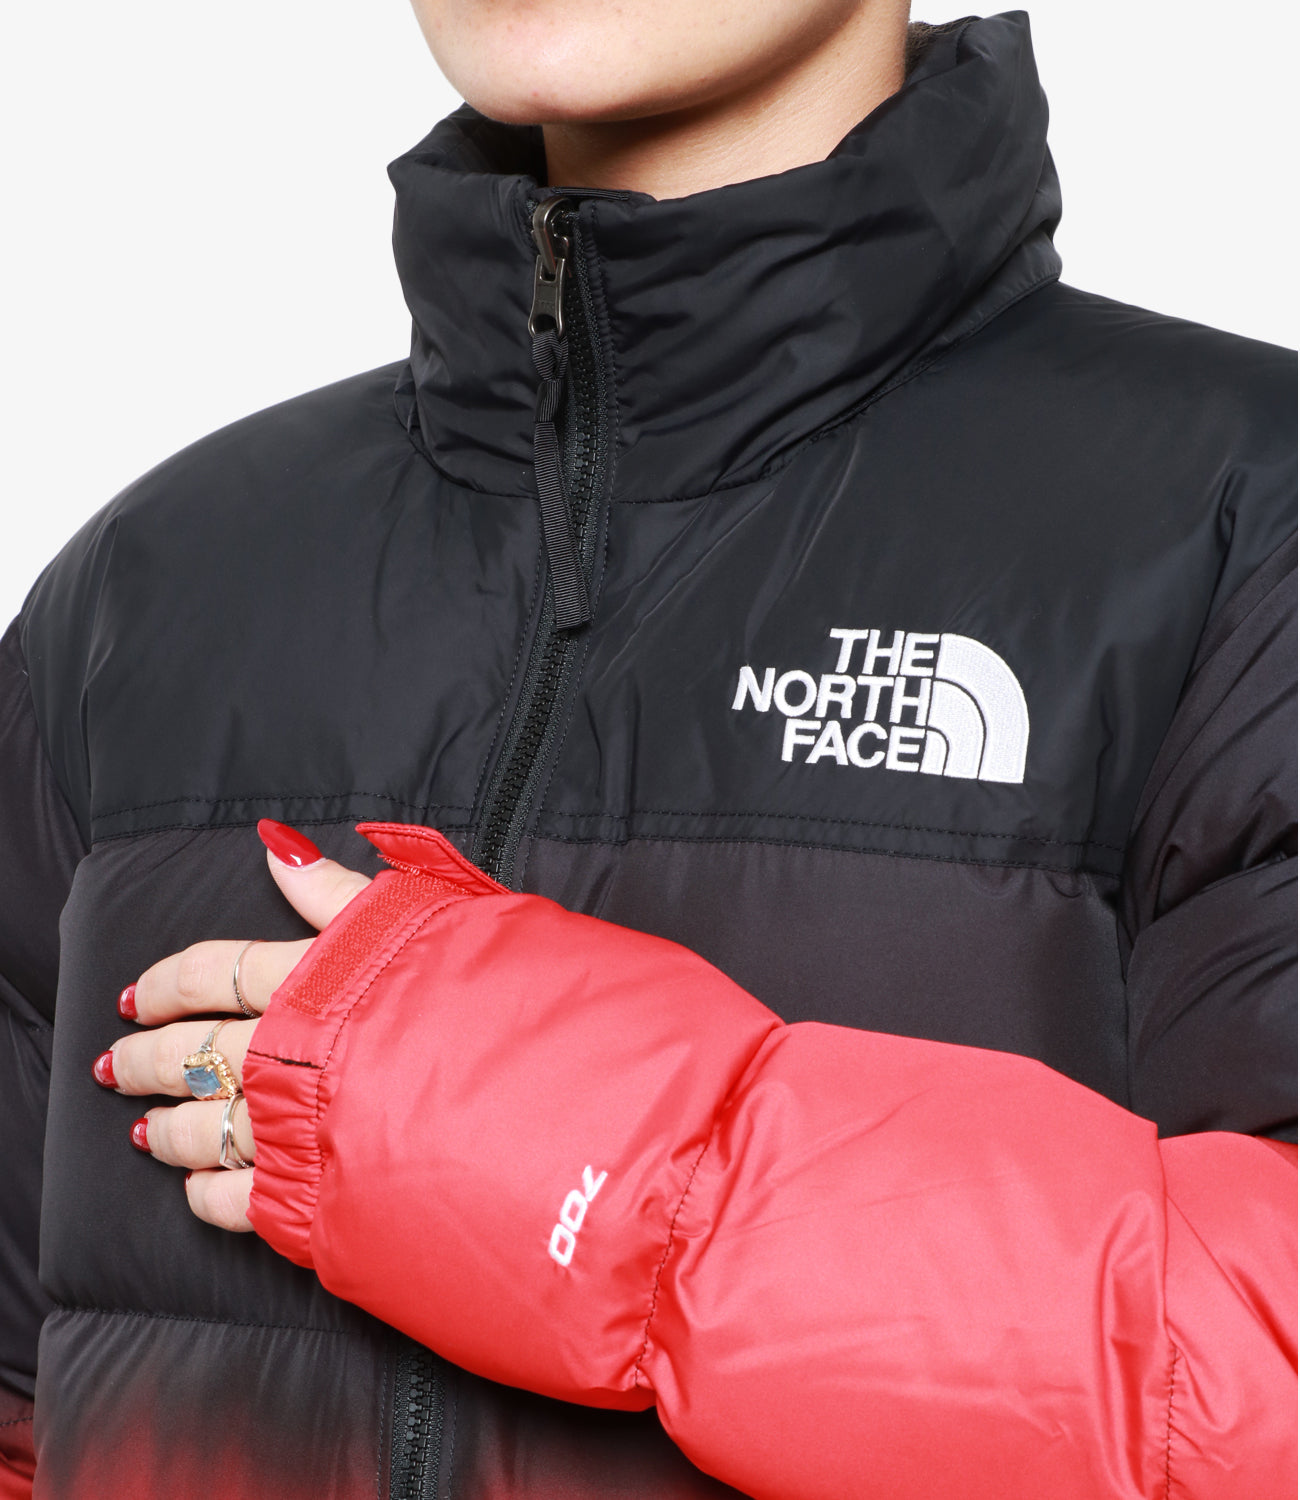 The North Face | Piumino Nupse Dip Die Jacket Nero e Rosso